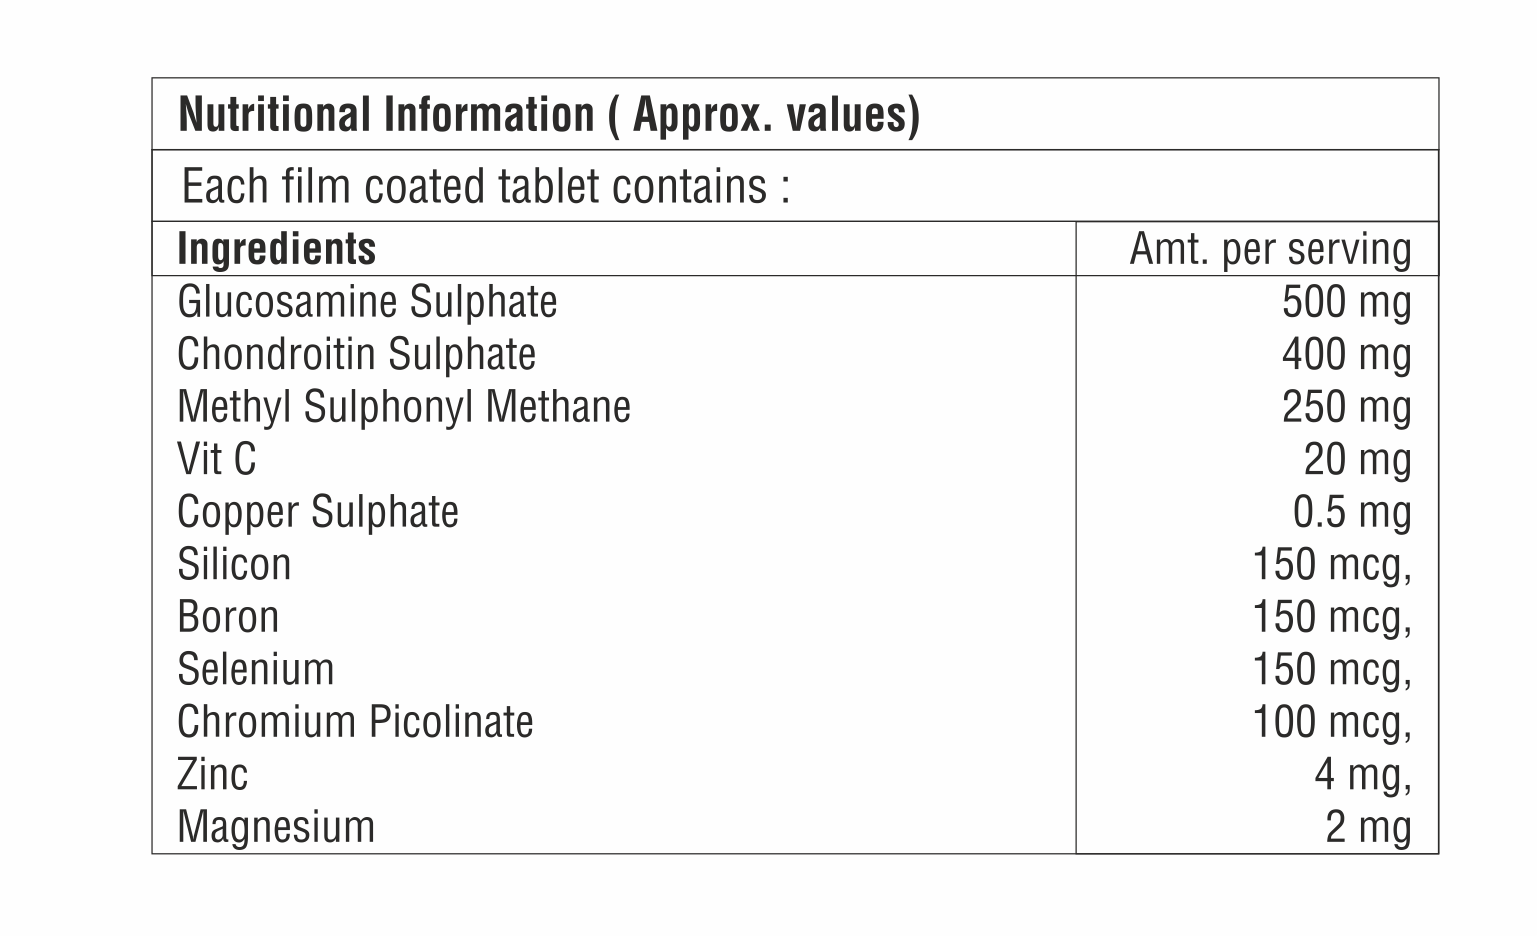 Glucosamine With Vitamin C Tablet